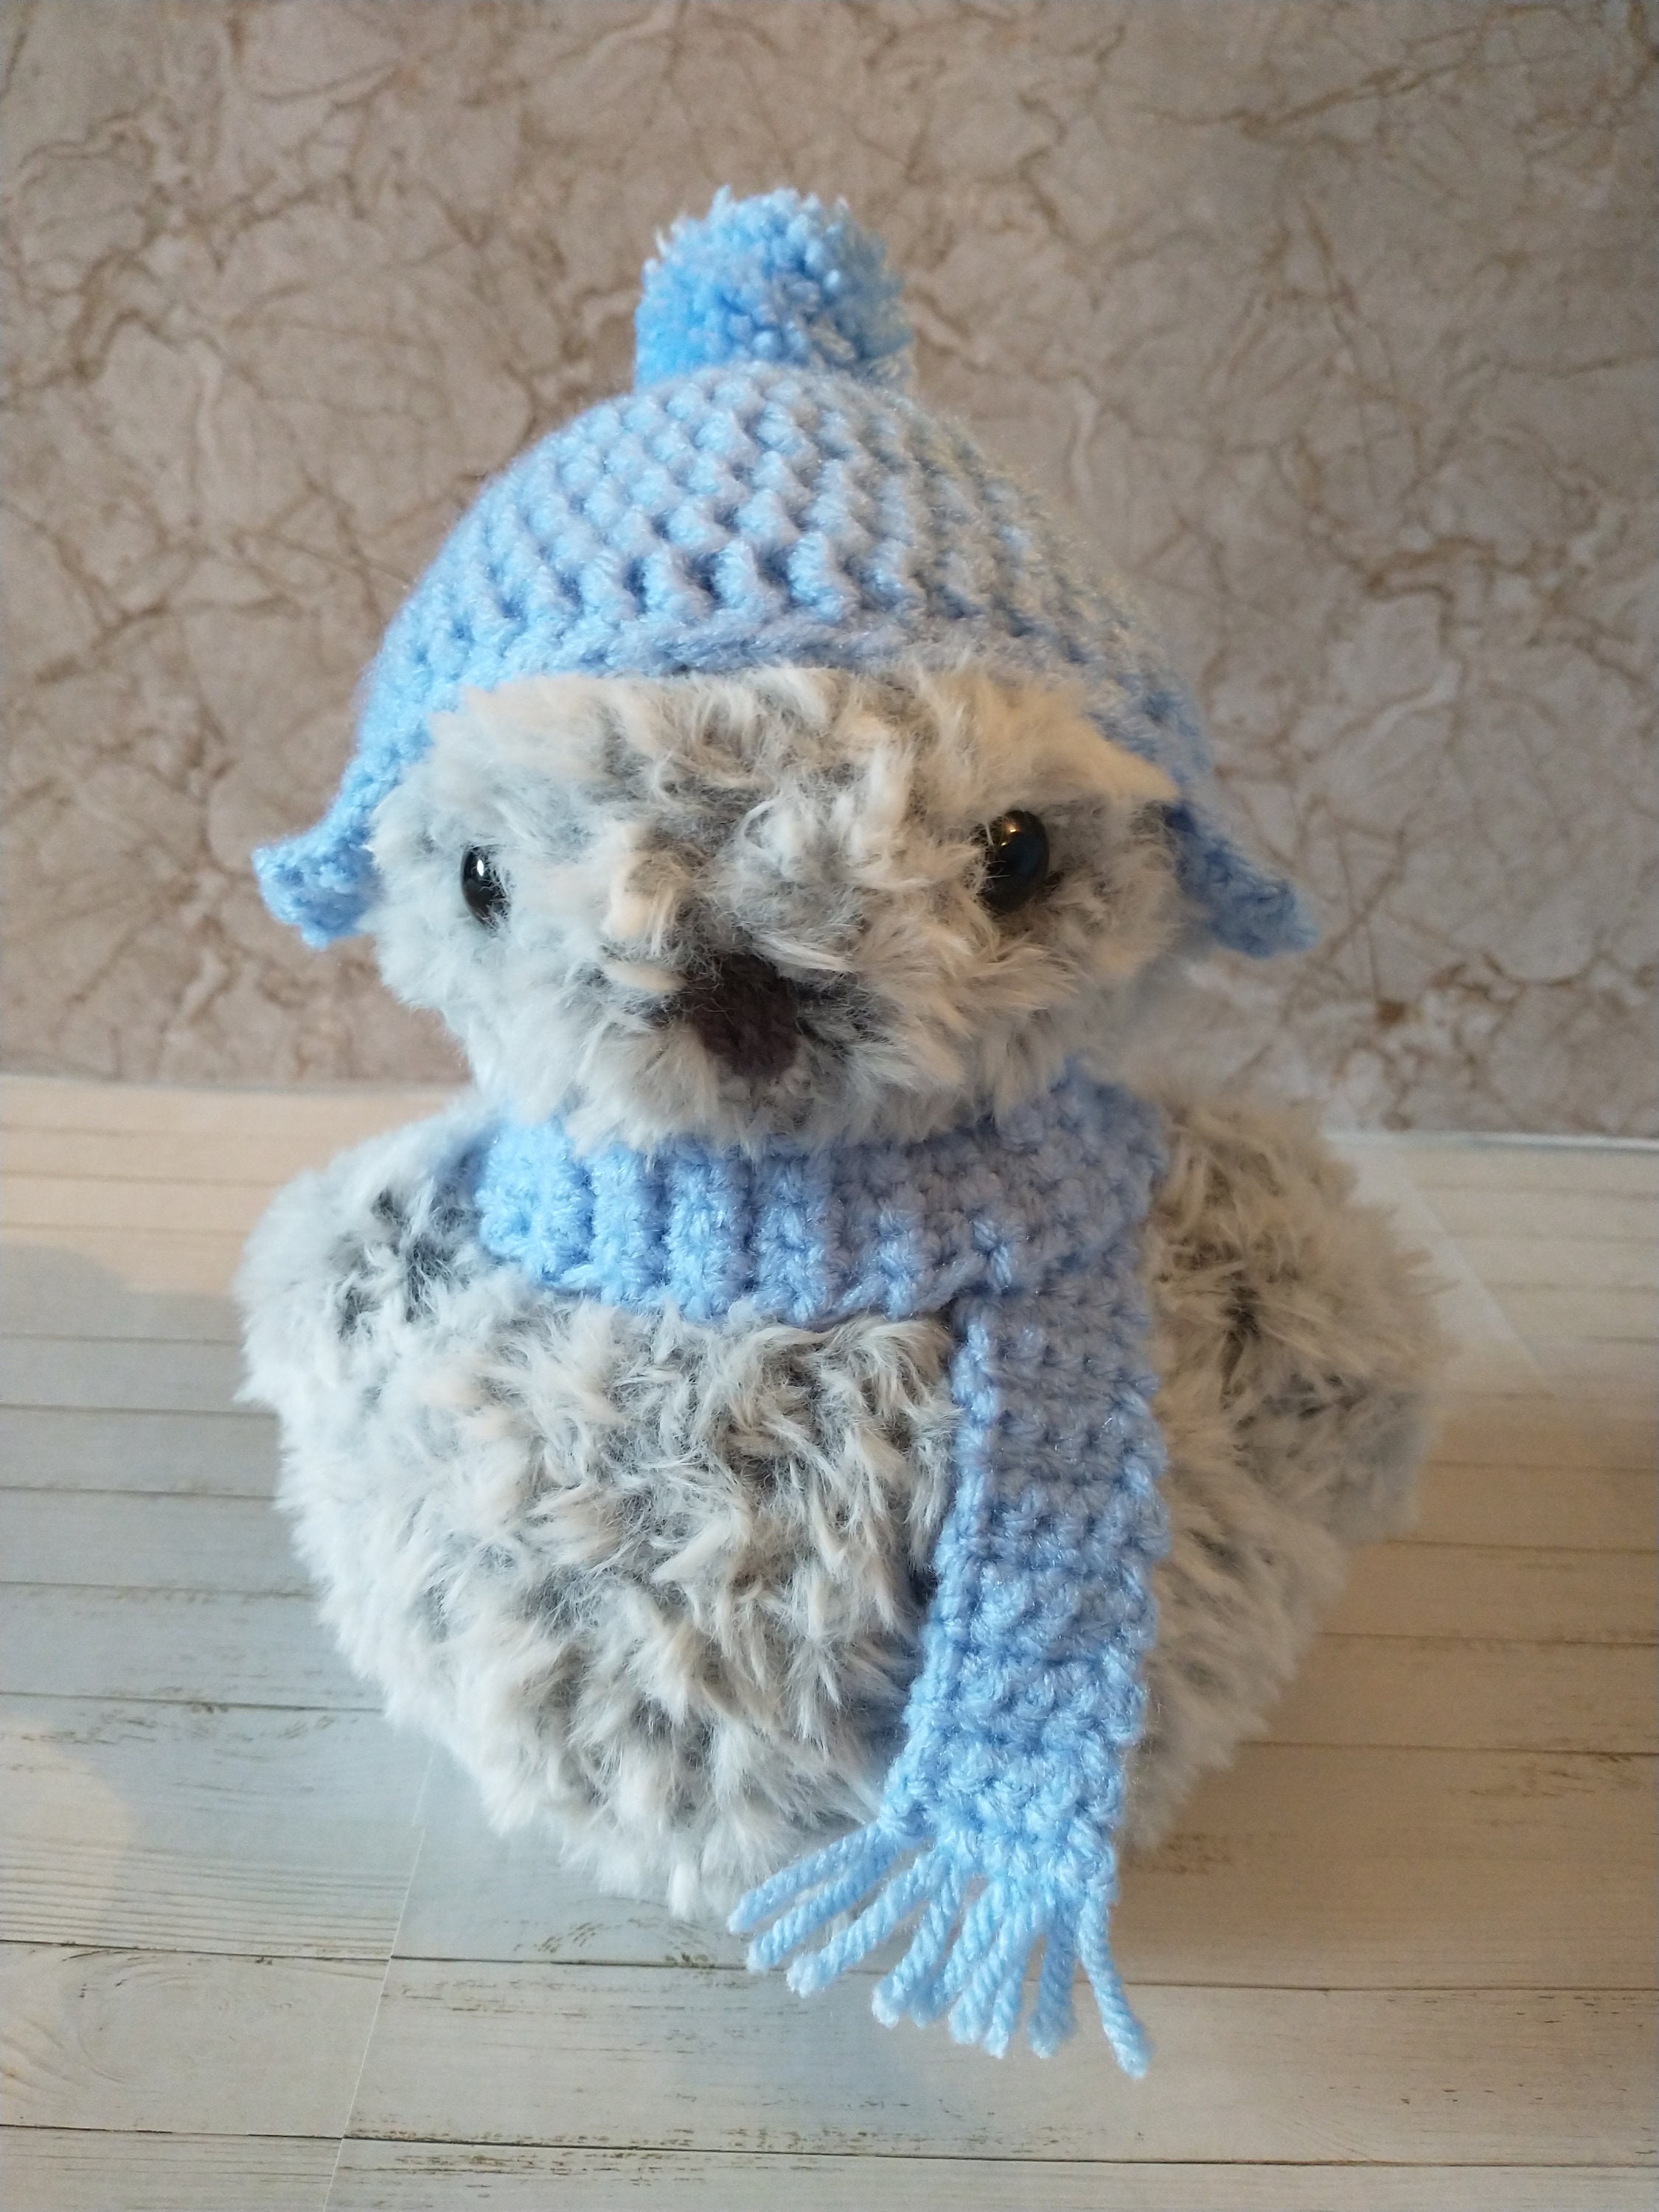 Crochet Kits for Beginners - All-in-One Stuffed Animal Knitting